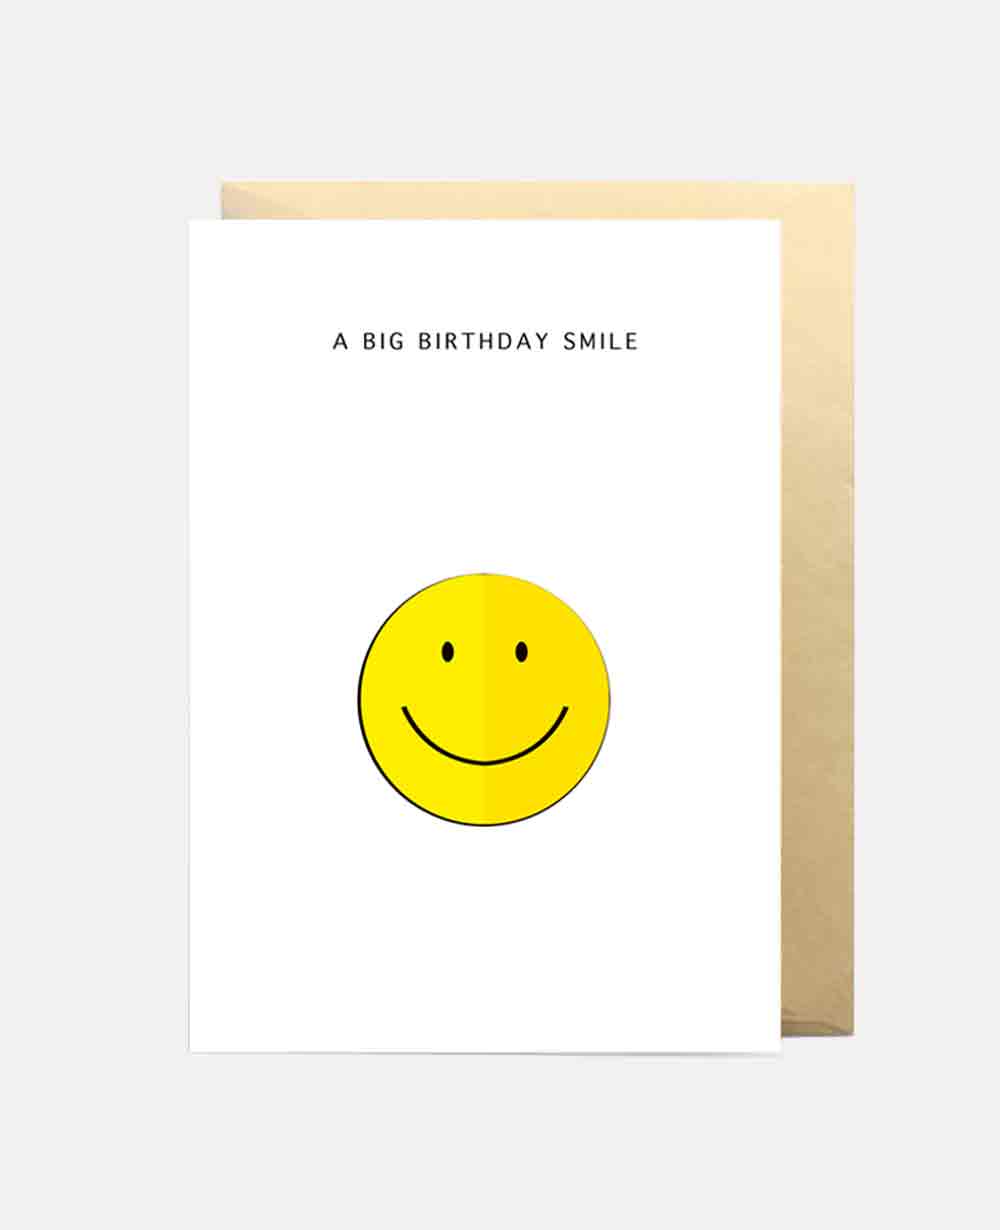 3D CARD "BIG BIRTHDAY SMILE”